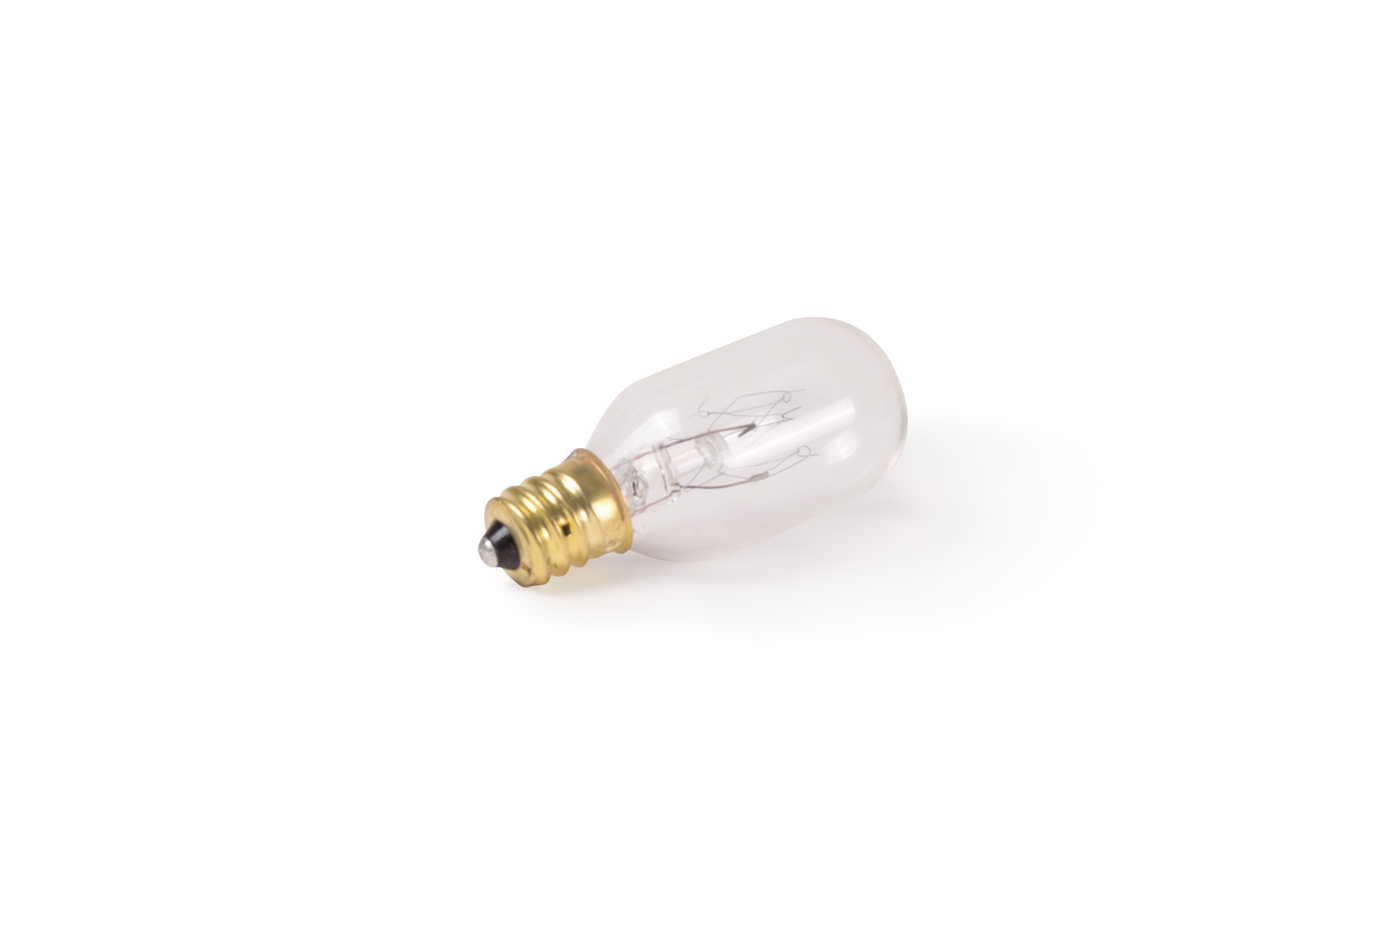 VIntage Bulb Electric Wax Melter/Burner - Inc. Free Wax Melts